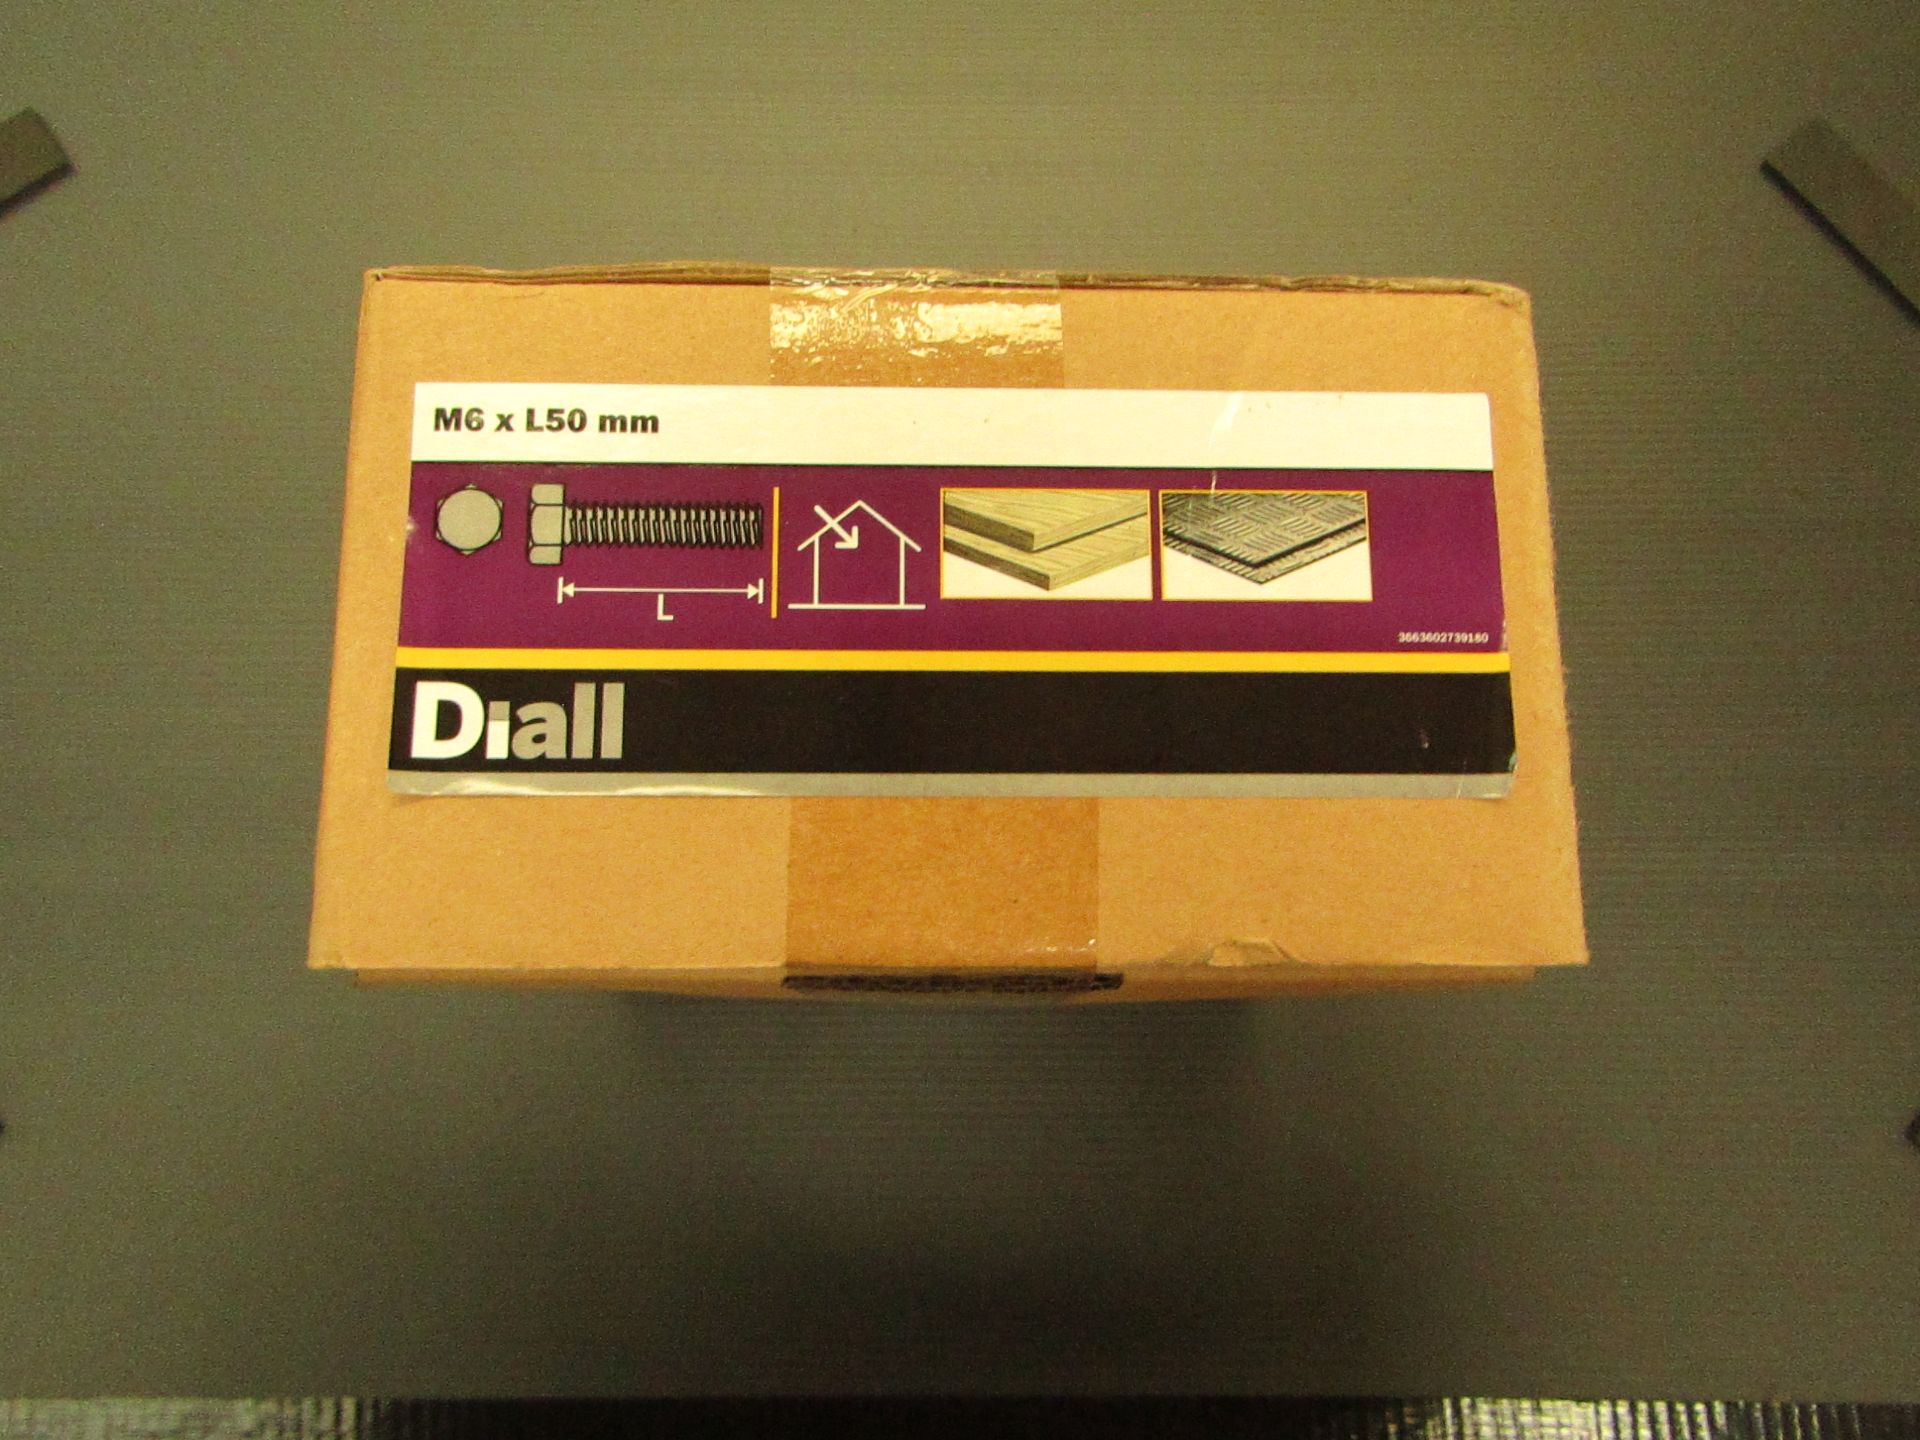 Diall - M6 x L50 mm Hex Bolt 4.8 ZP - 4KG Box - New & Boxed.